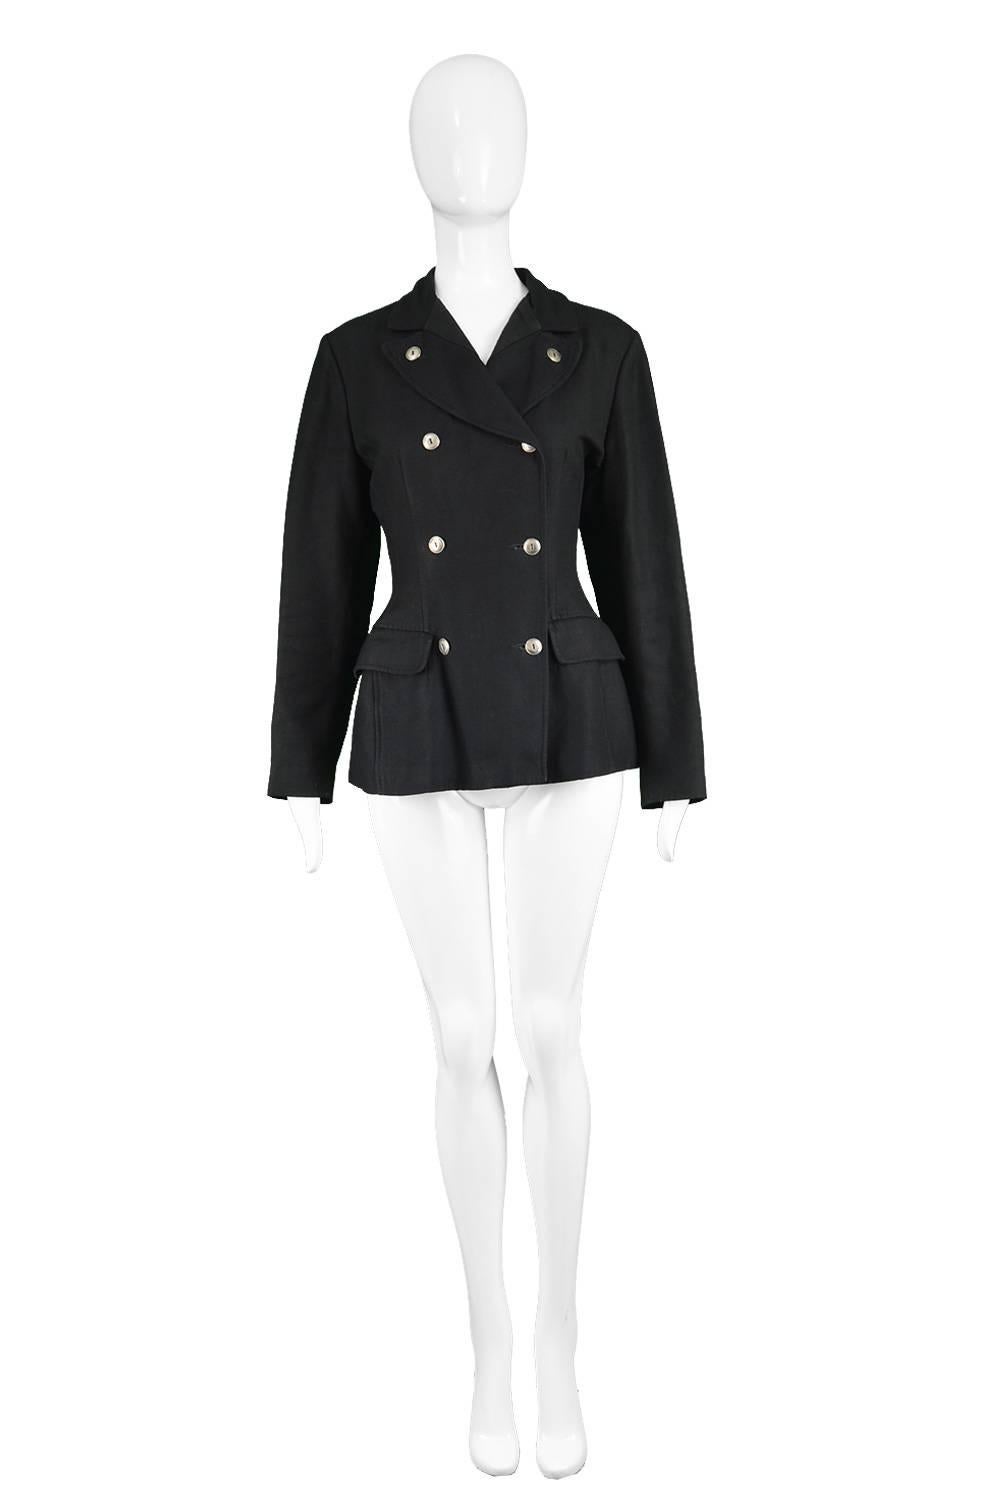 Jean Paul Gaultier Vintage 1980s Women's Black Double Breasted Blazer Jacket

Estimated Size: UK 10/ US 6/ EU 38. Please check measurements. 
Bust - 36” / 91cm (allow a couple of inches room for movement)
Waist - 28” / 71cm
Hips - 36” / 91cm
Length